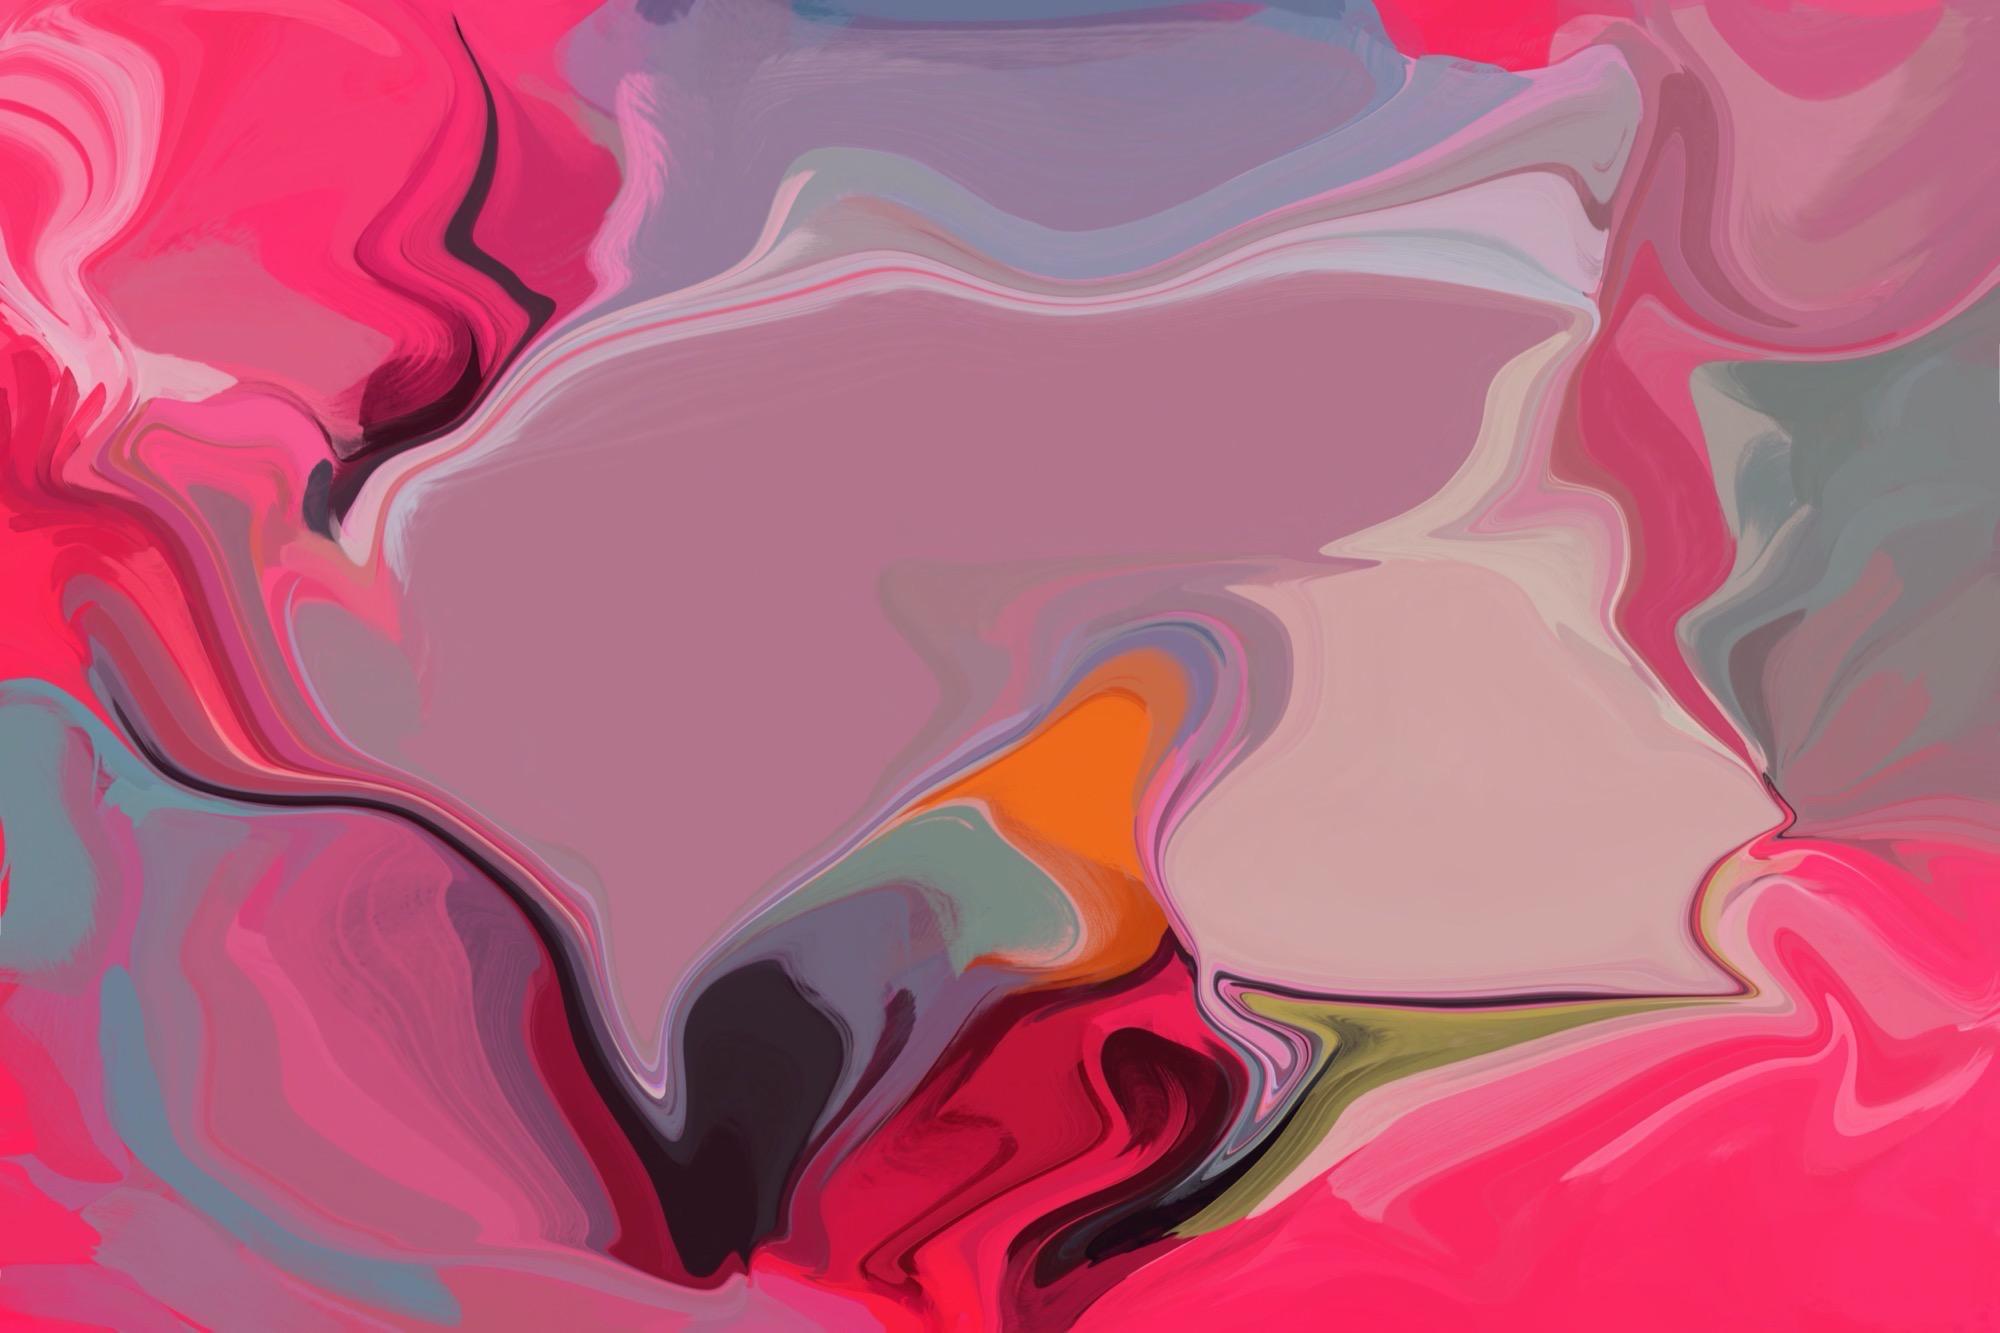 Irena Orlov Abstract Painting – Rosa Gemälde Mixed Media Leinwand 45x60 Zoll" Die kreative Struktur